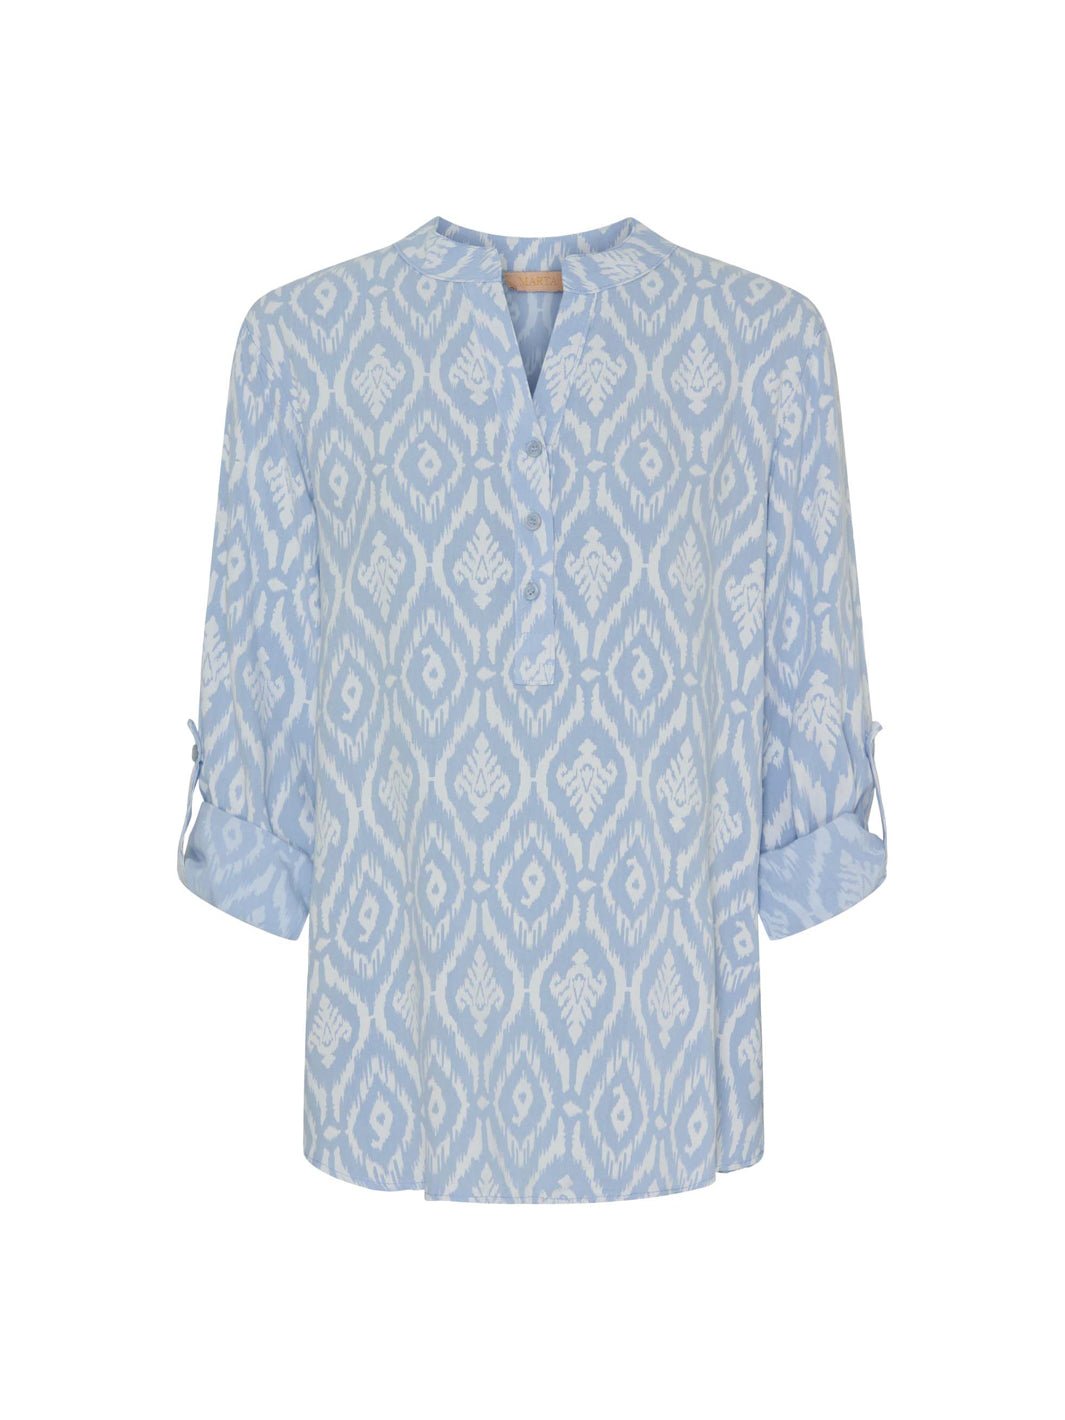 Marta du Chateau Elsa shirt light blue - Online-Mode